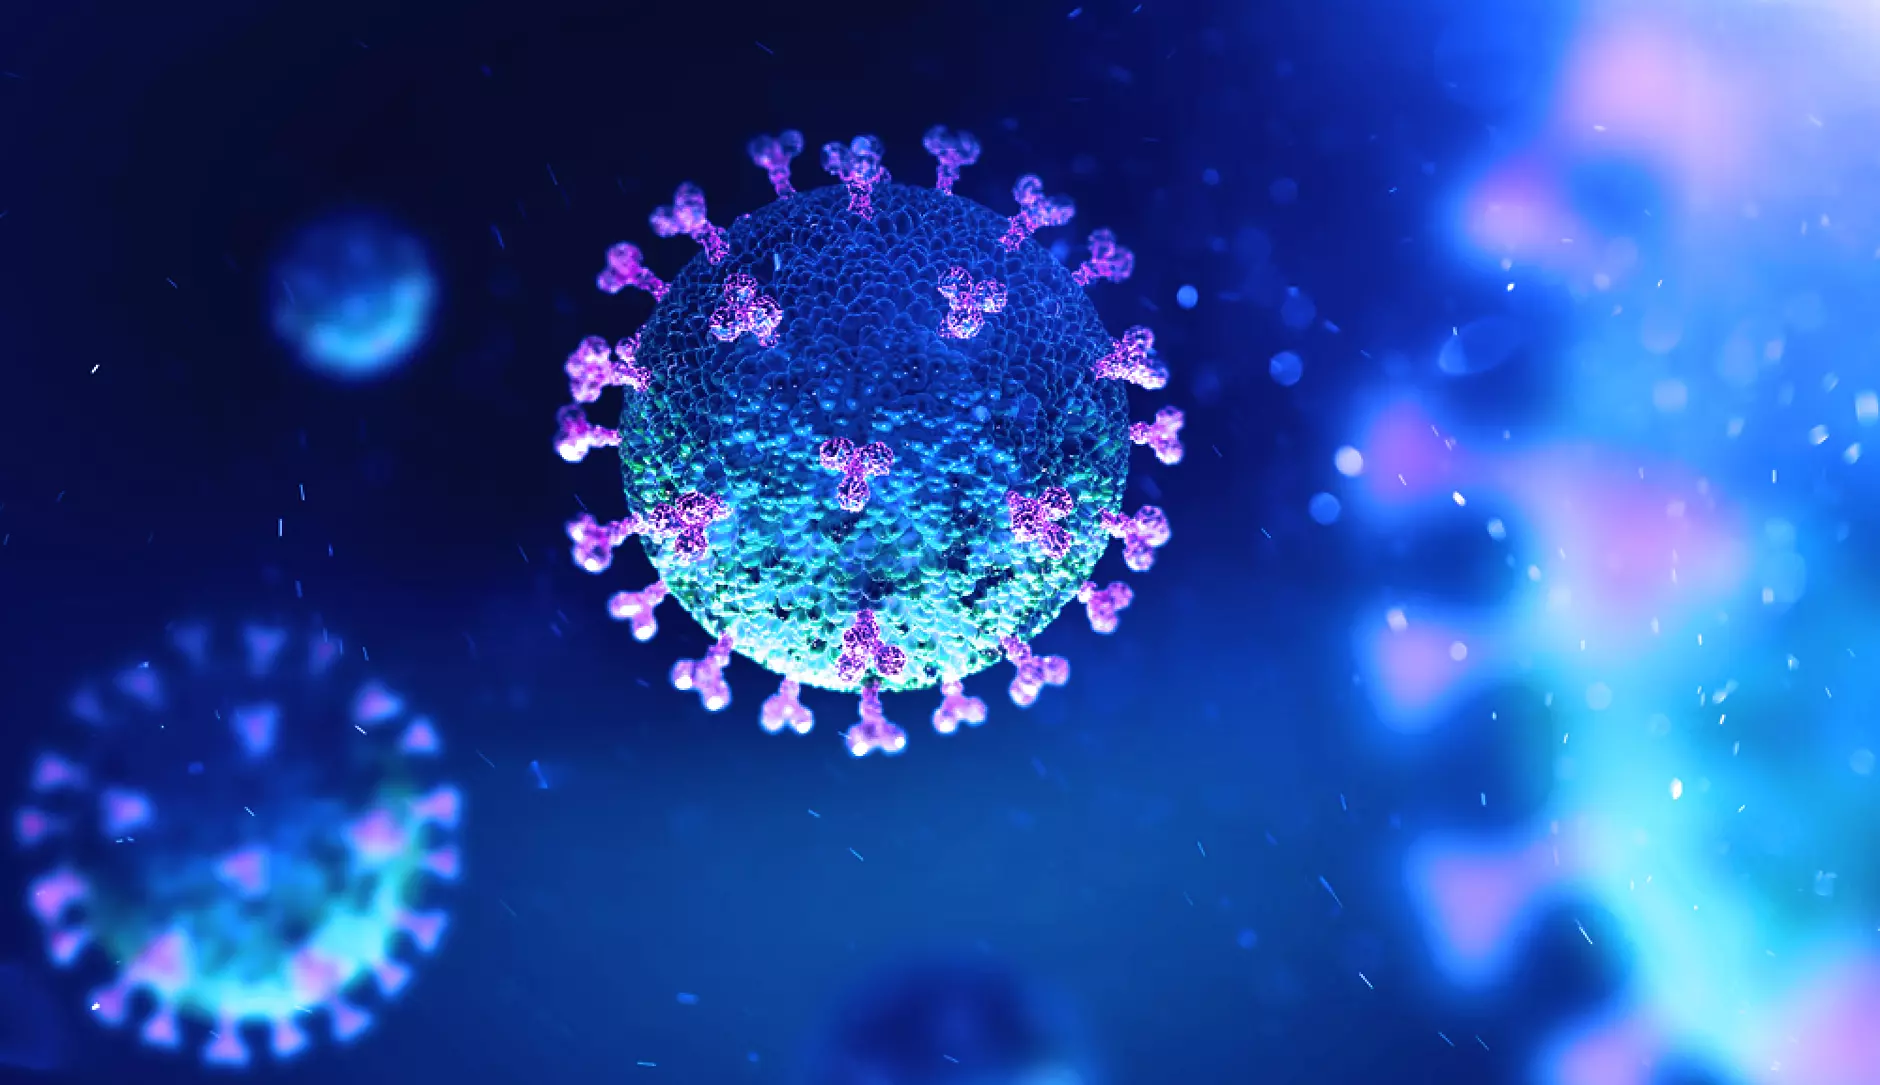  663 са новите случаи на коронавирус